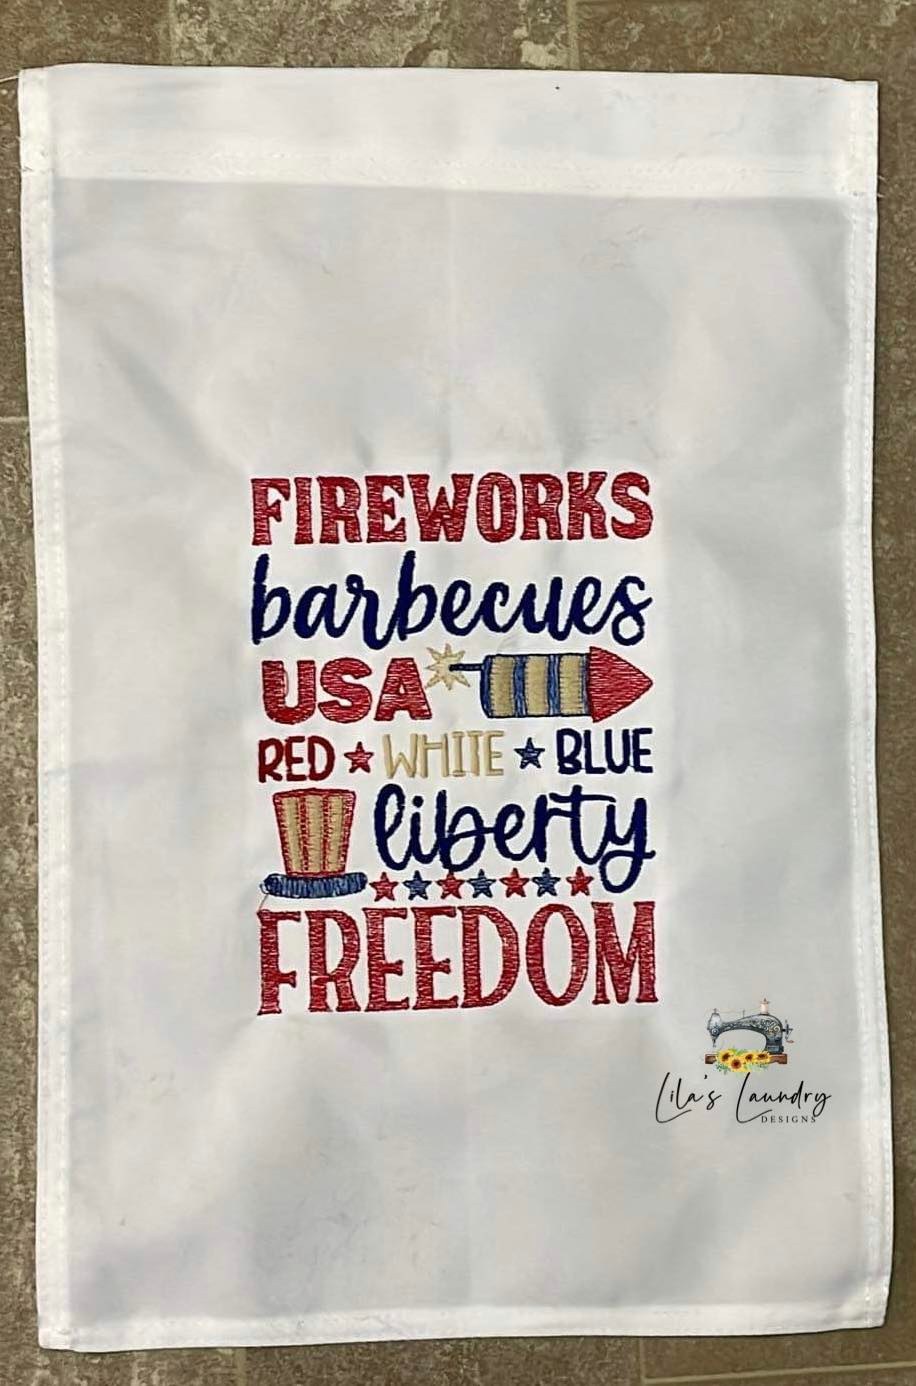 Fireworks Liberty Freedom - 3 sizes- Digital Embroidery Design